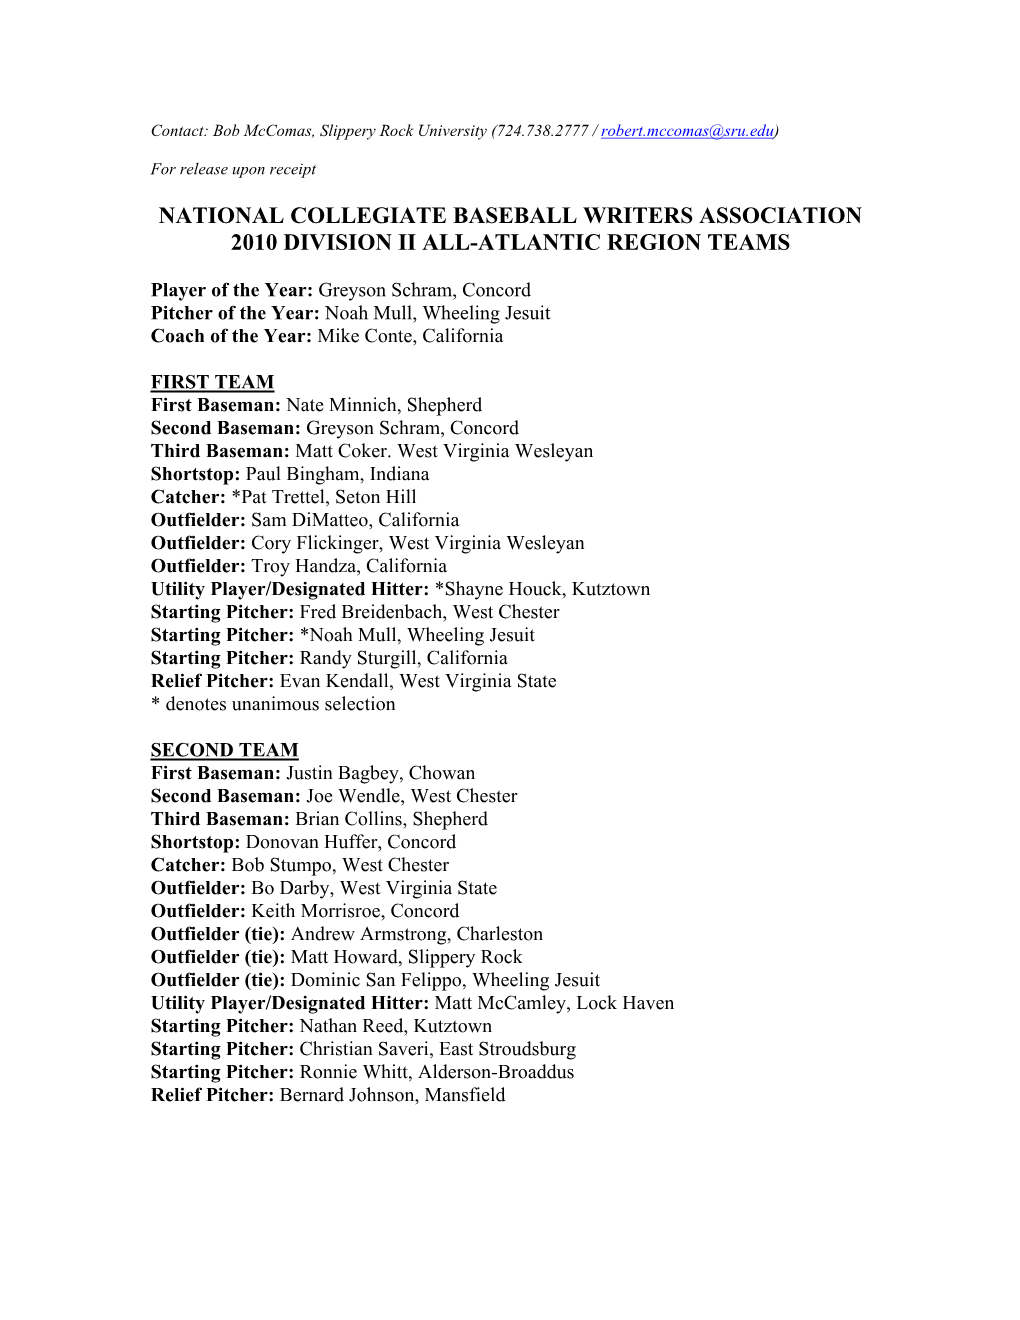 National Collegiate Baseball Writers Association 2010 Division Ii All-Atlantic Region Teams